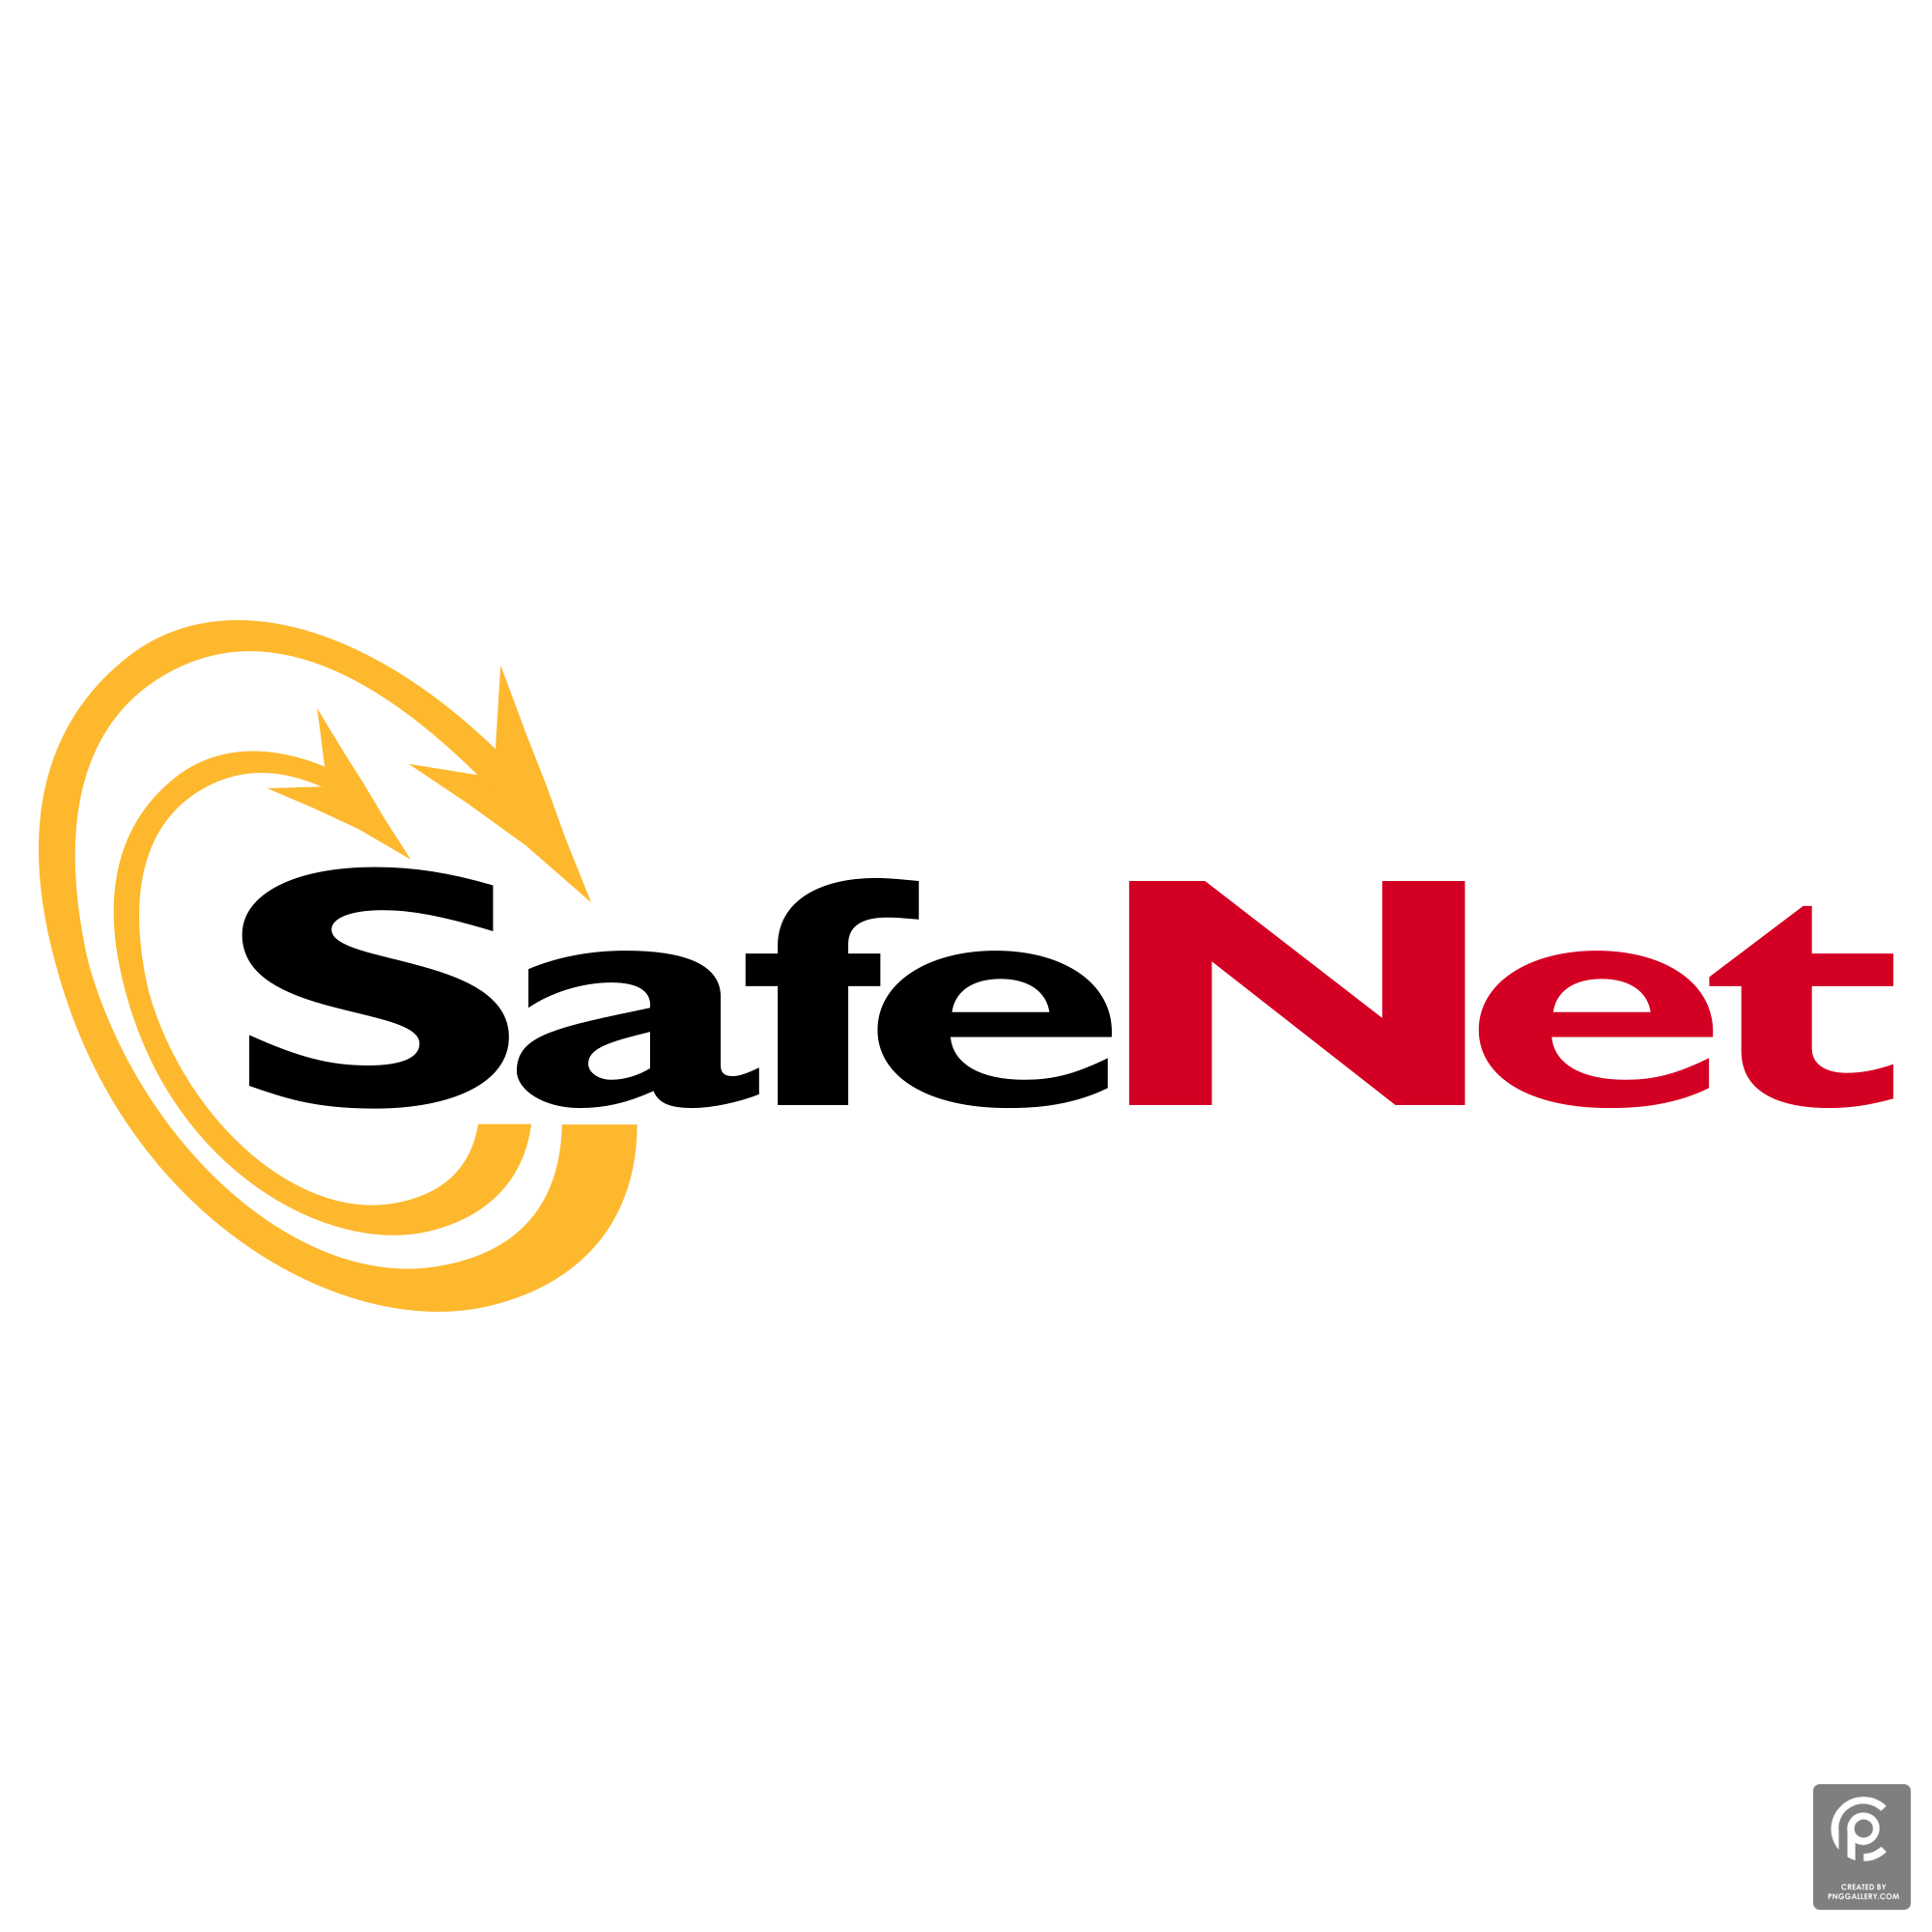 Safenet Logo Transparent Photo